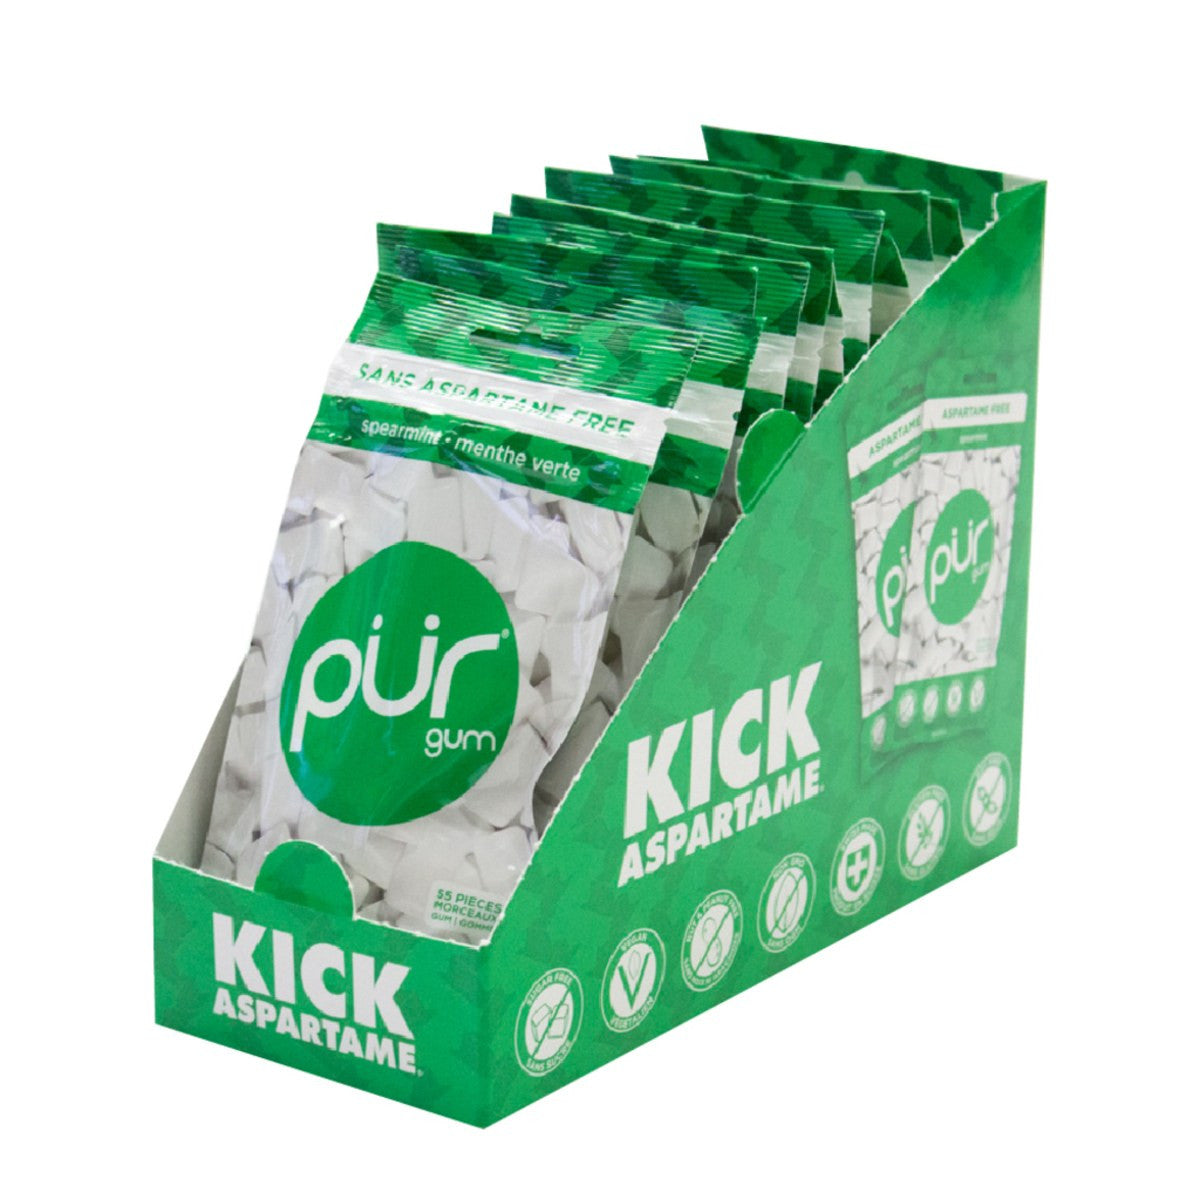 PUR Spearmint Gum Single Bag 77g Or A Box Of 12, Aspartame Free & Gluten Free {Resealable Bag}